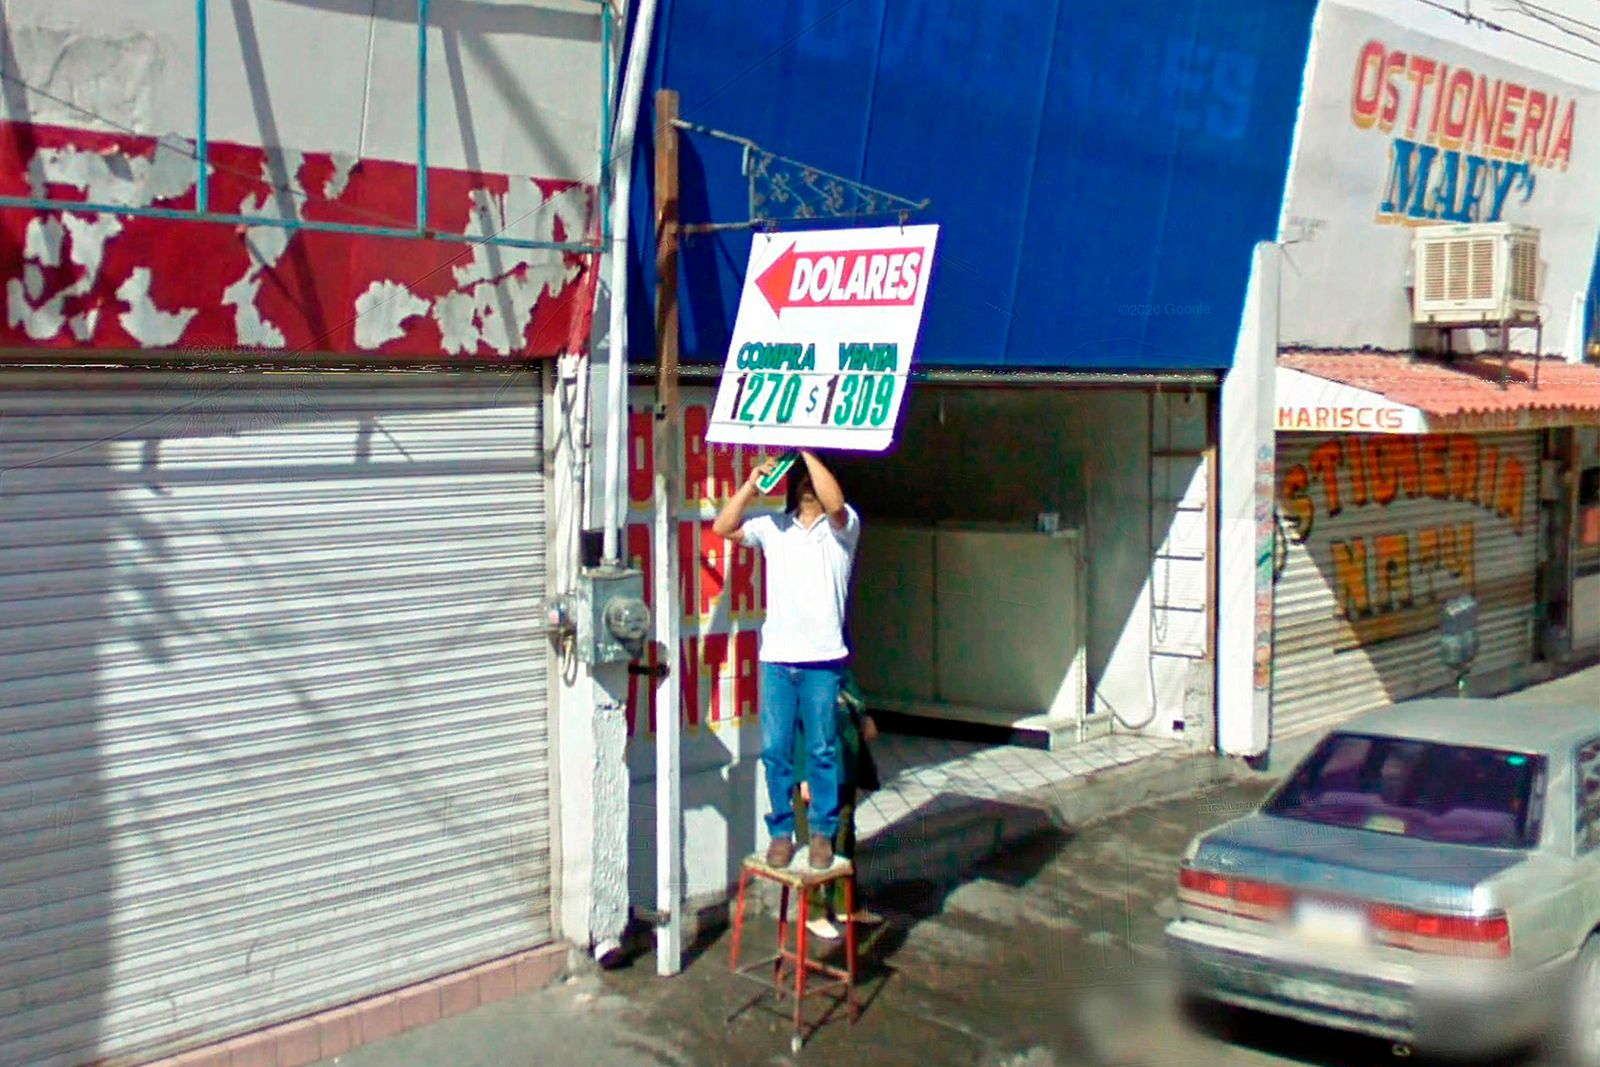 Alejandro Luperca Morales Documents Ciudad Juarez Through Google Maps Pictures